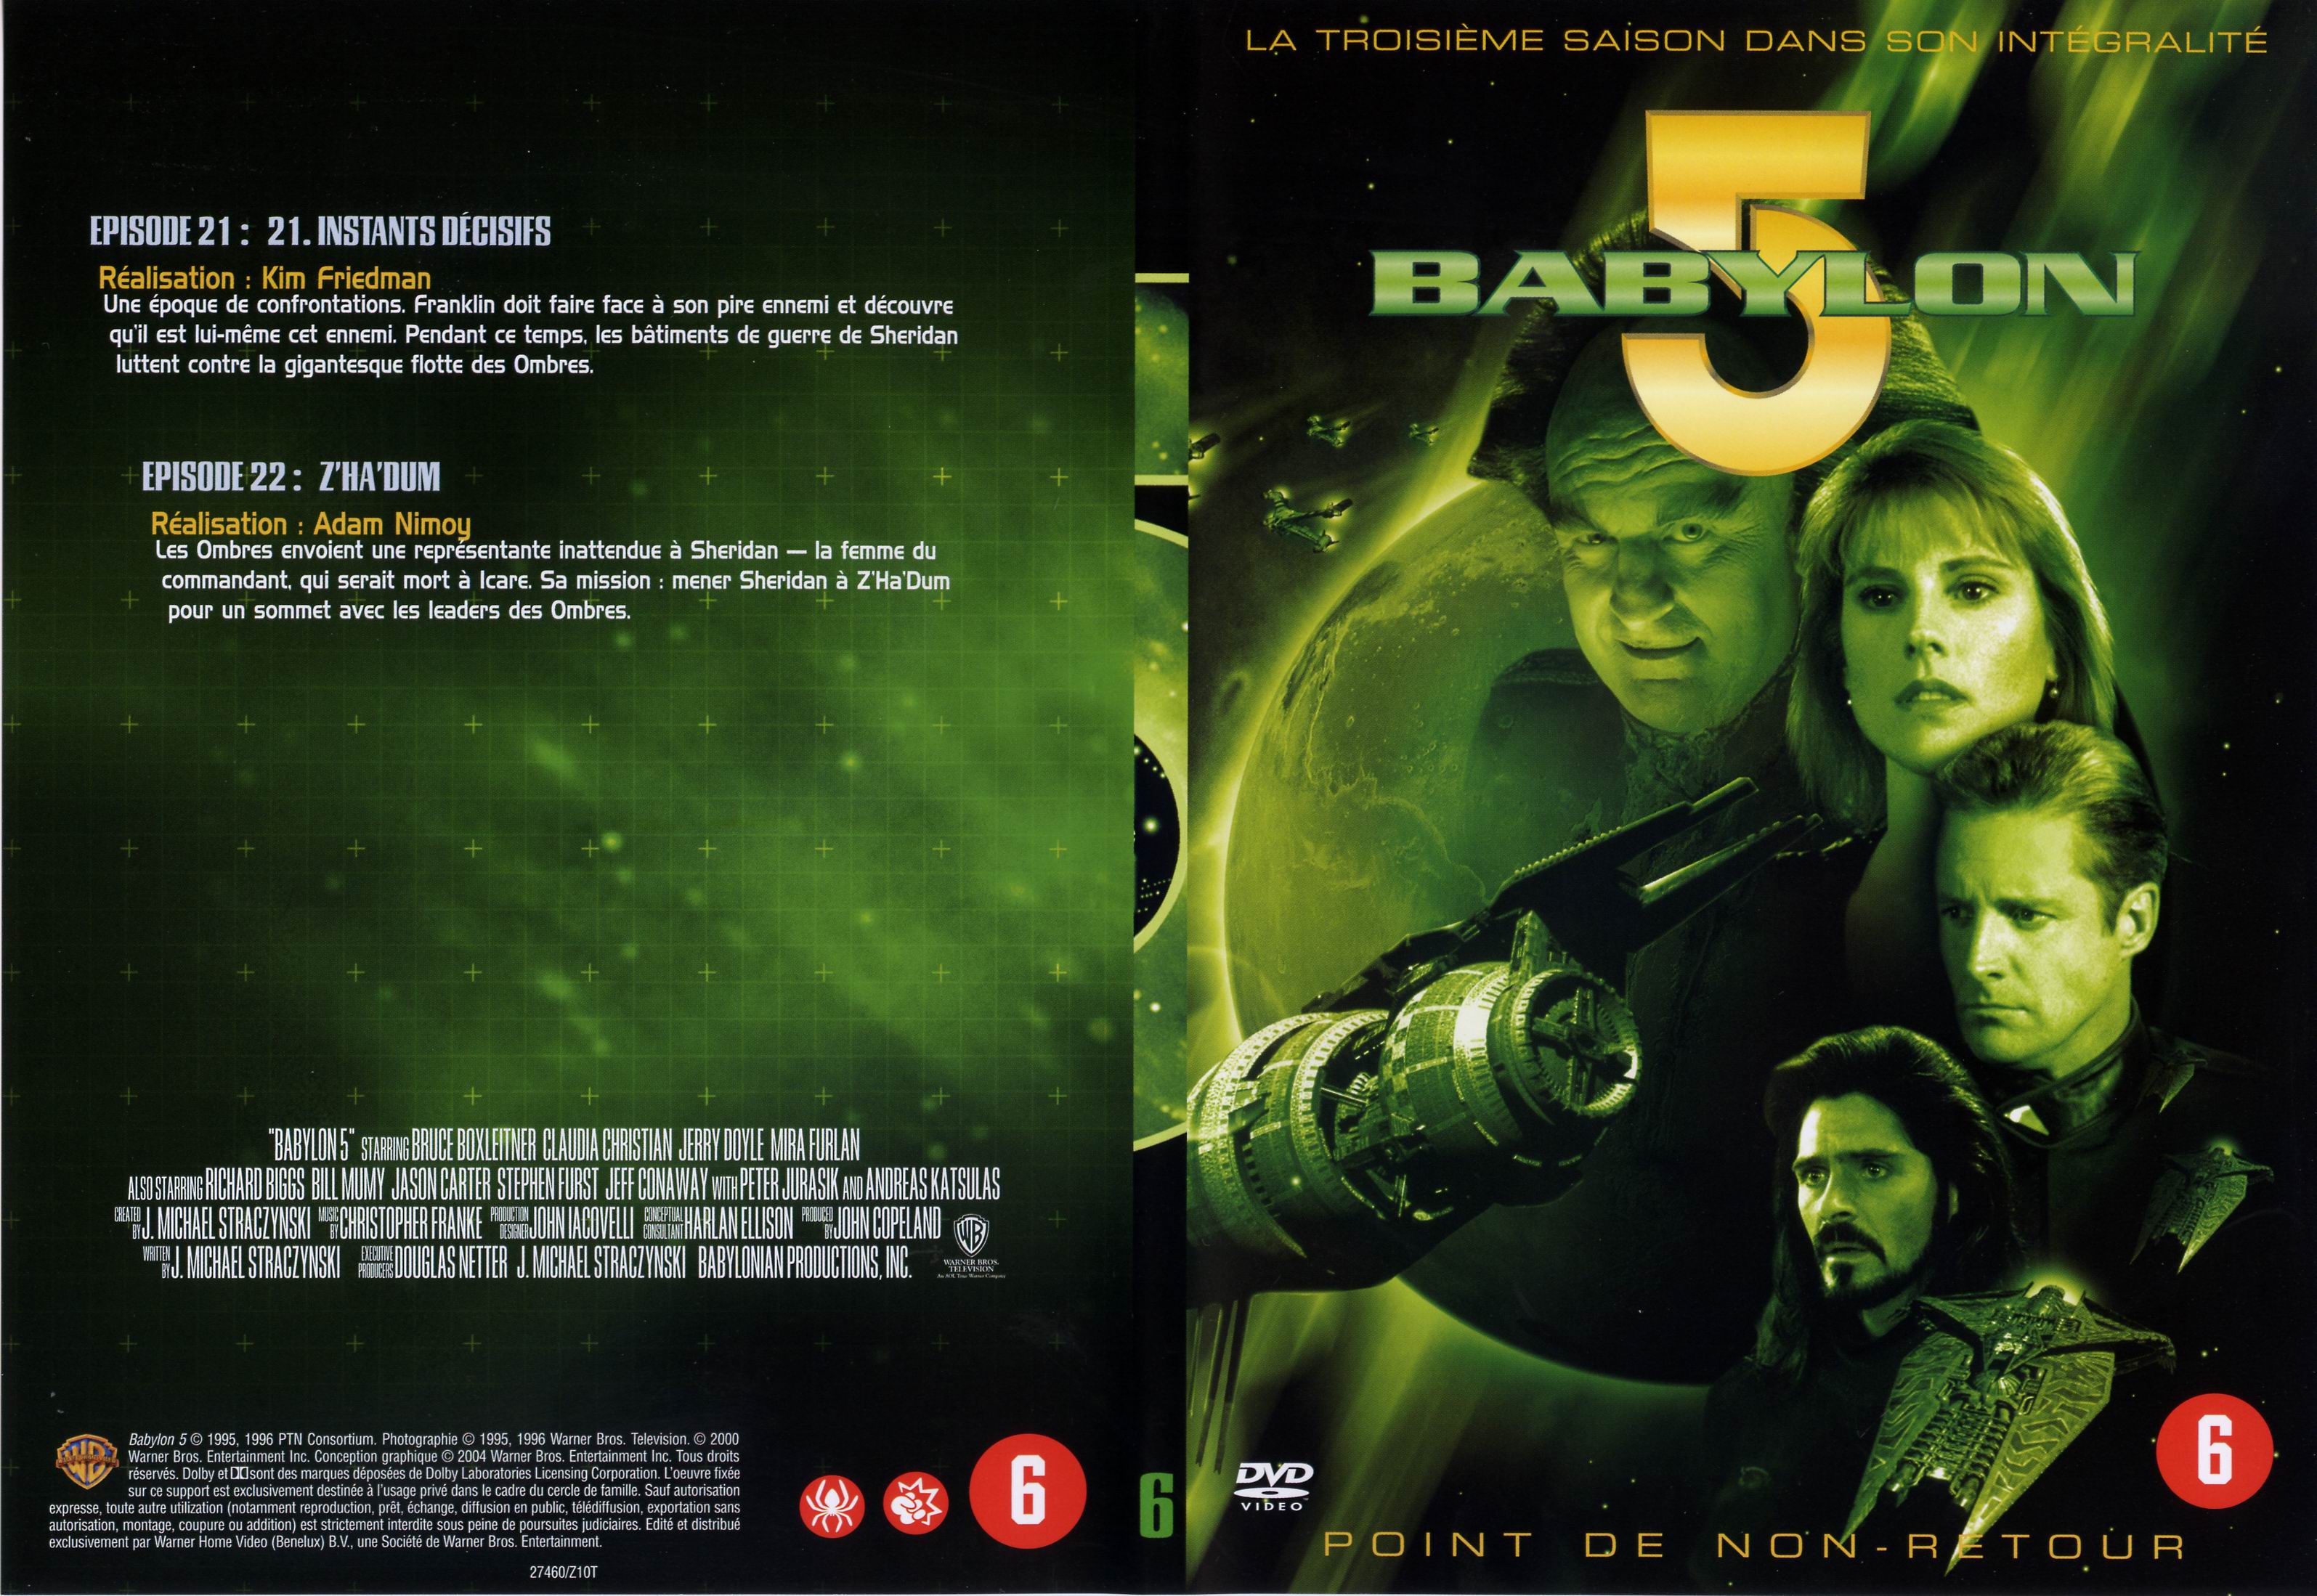 Jaquette DVD Babylon 5 saison 3 dvd 6